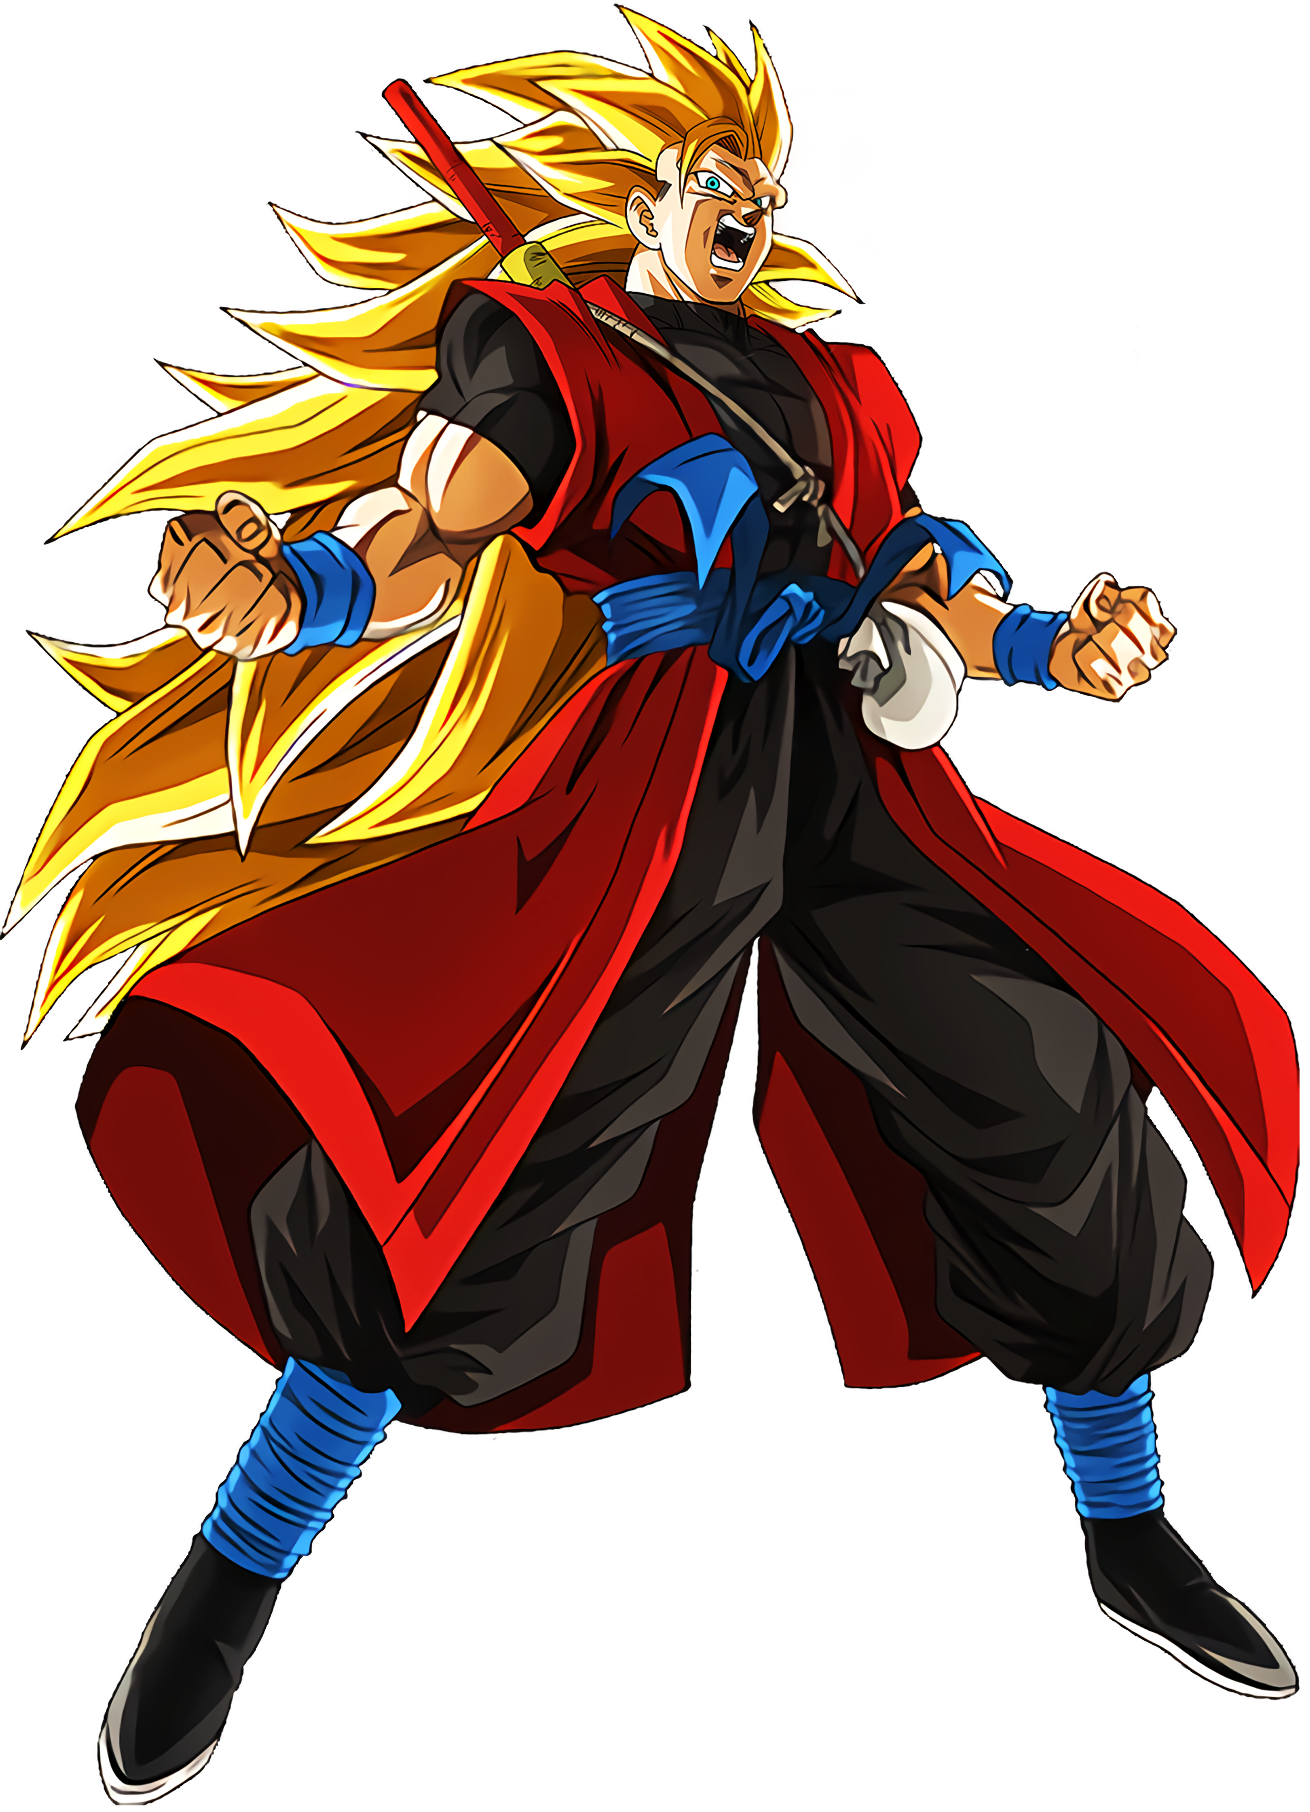 Son Goku (Super Dragon Ball Heroes), VS Battles Wiki